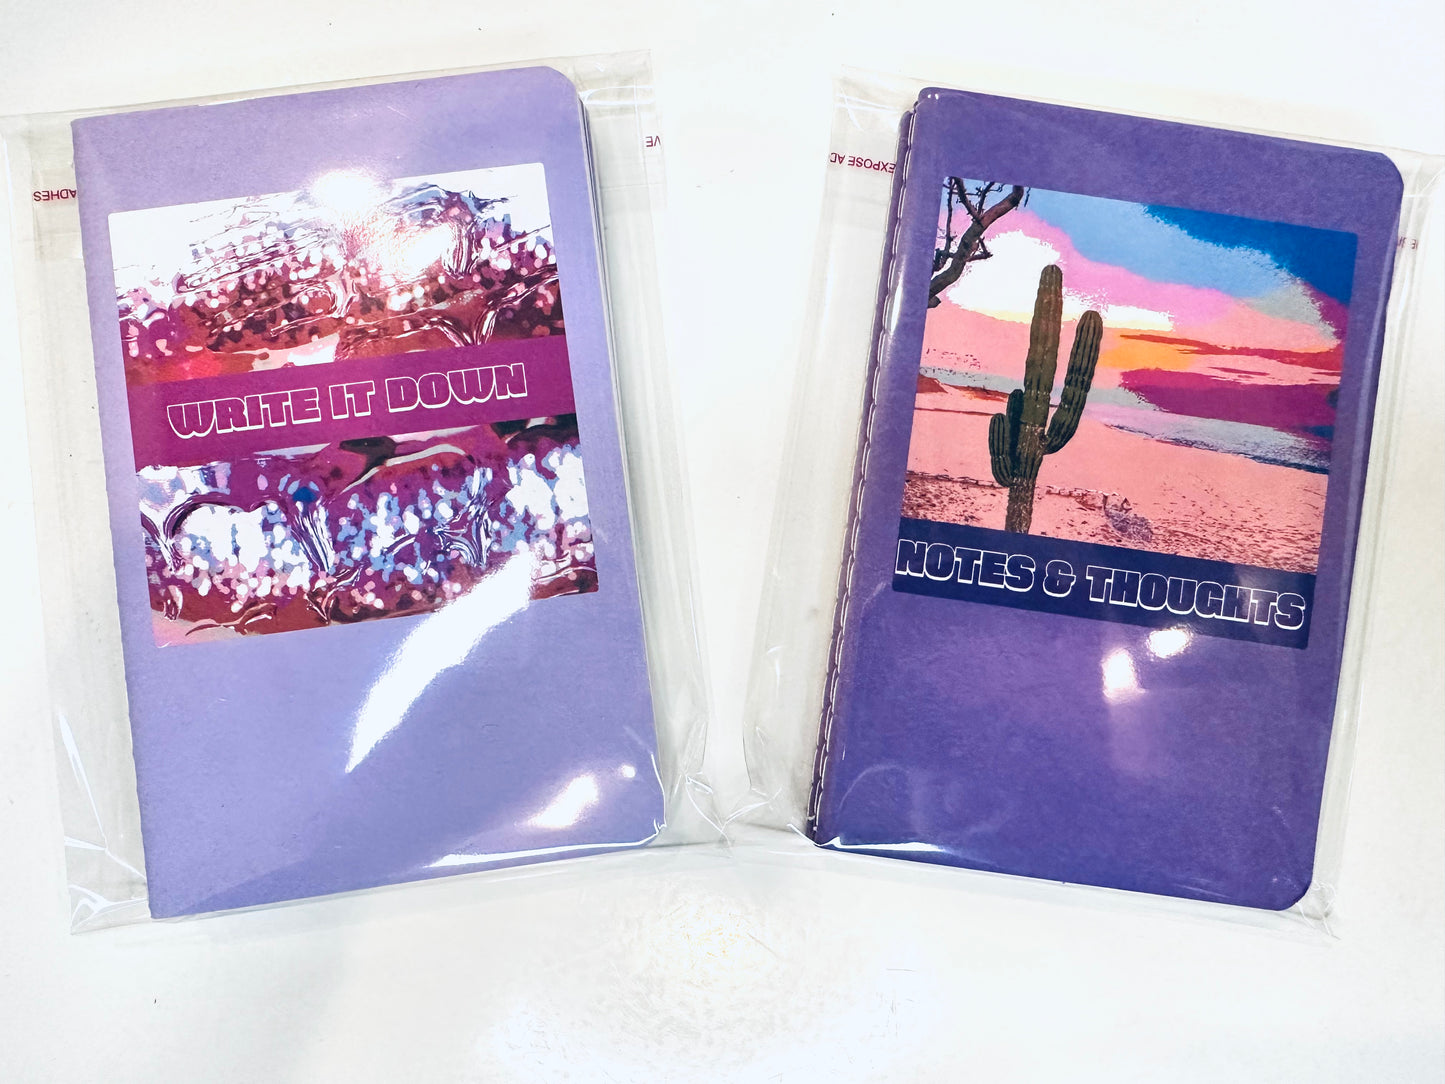 Purple MINI NOTEBOOKS set of 3 Scenic landscape Theme